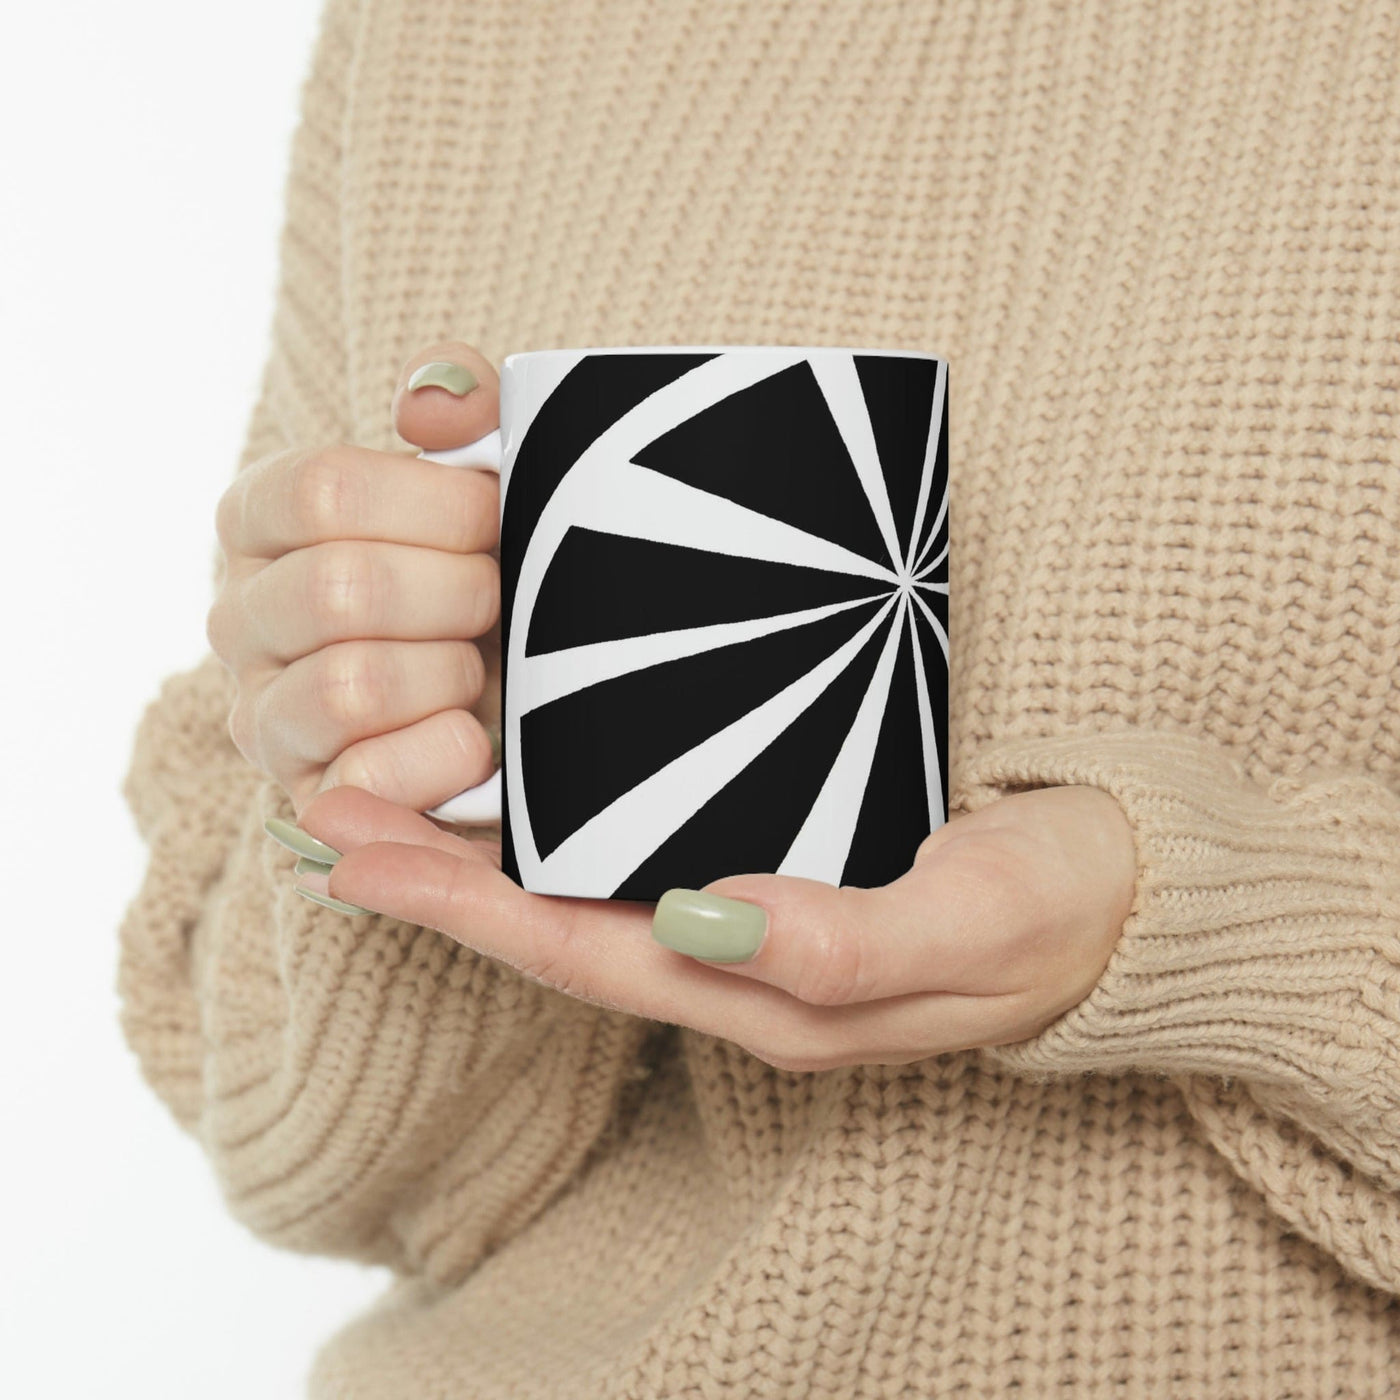 Decorative Ceramic Coffee Mug 15oz Black And White Geometric Pattern